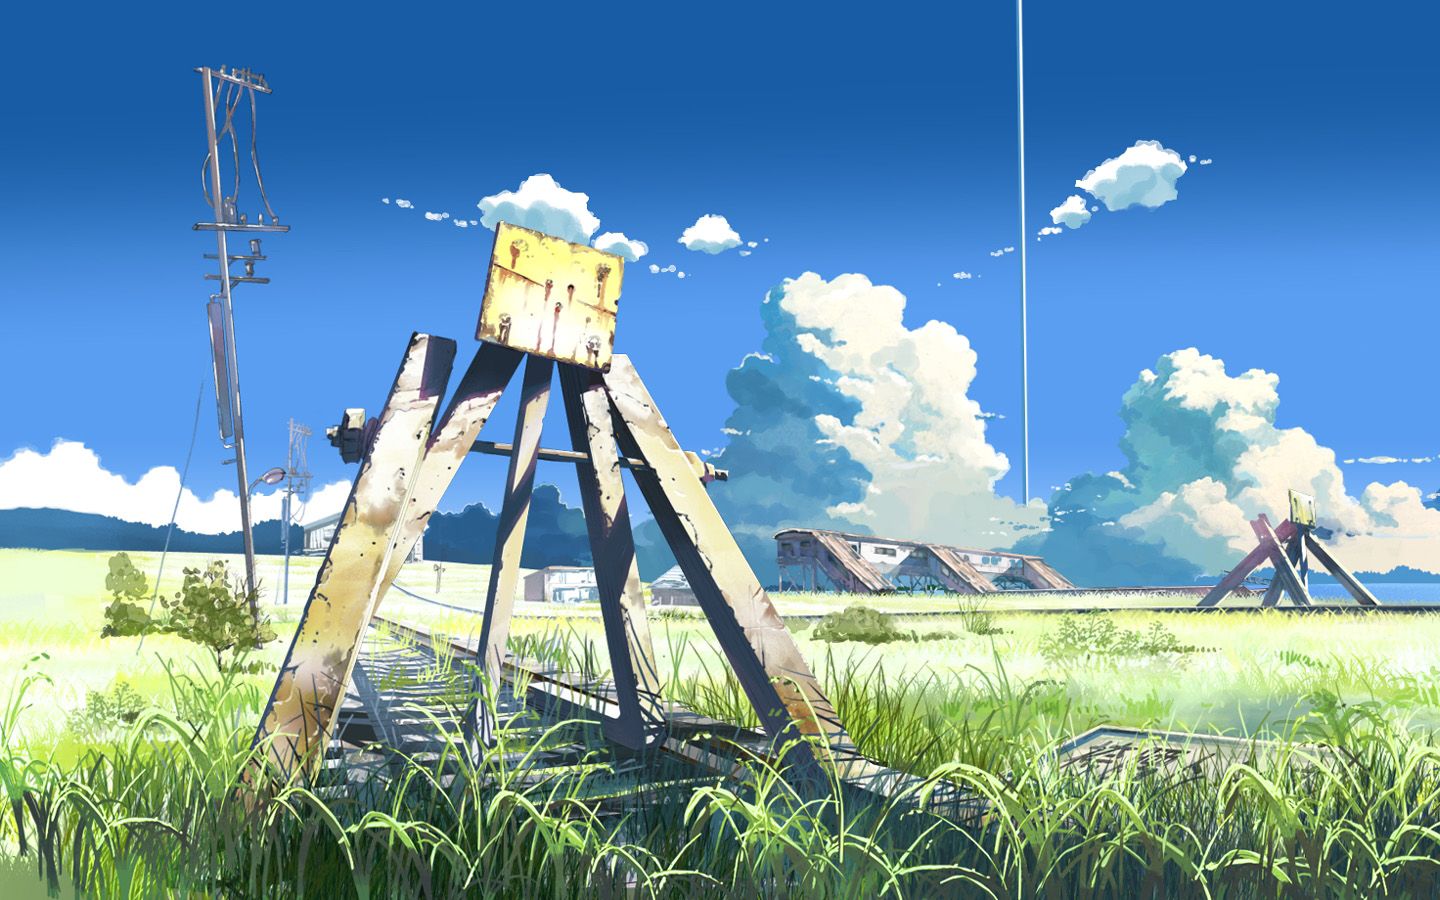 Studio Ghibli Backgrounds